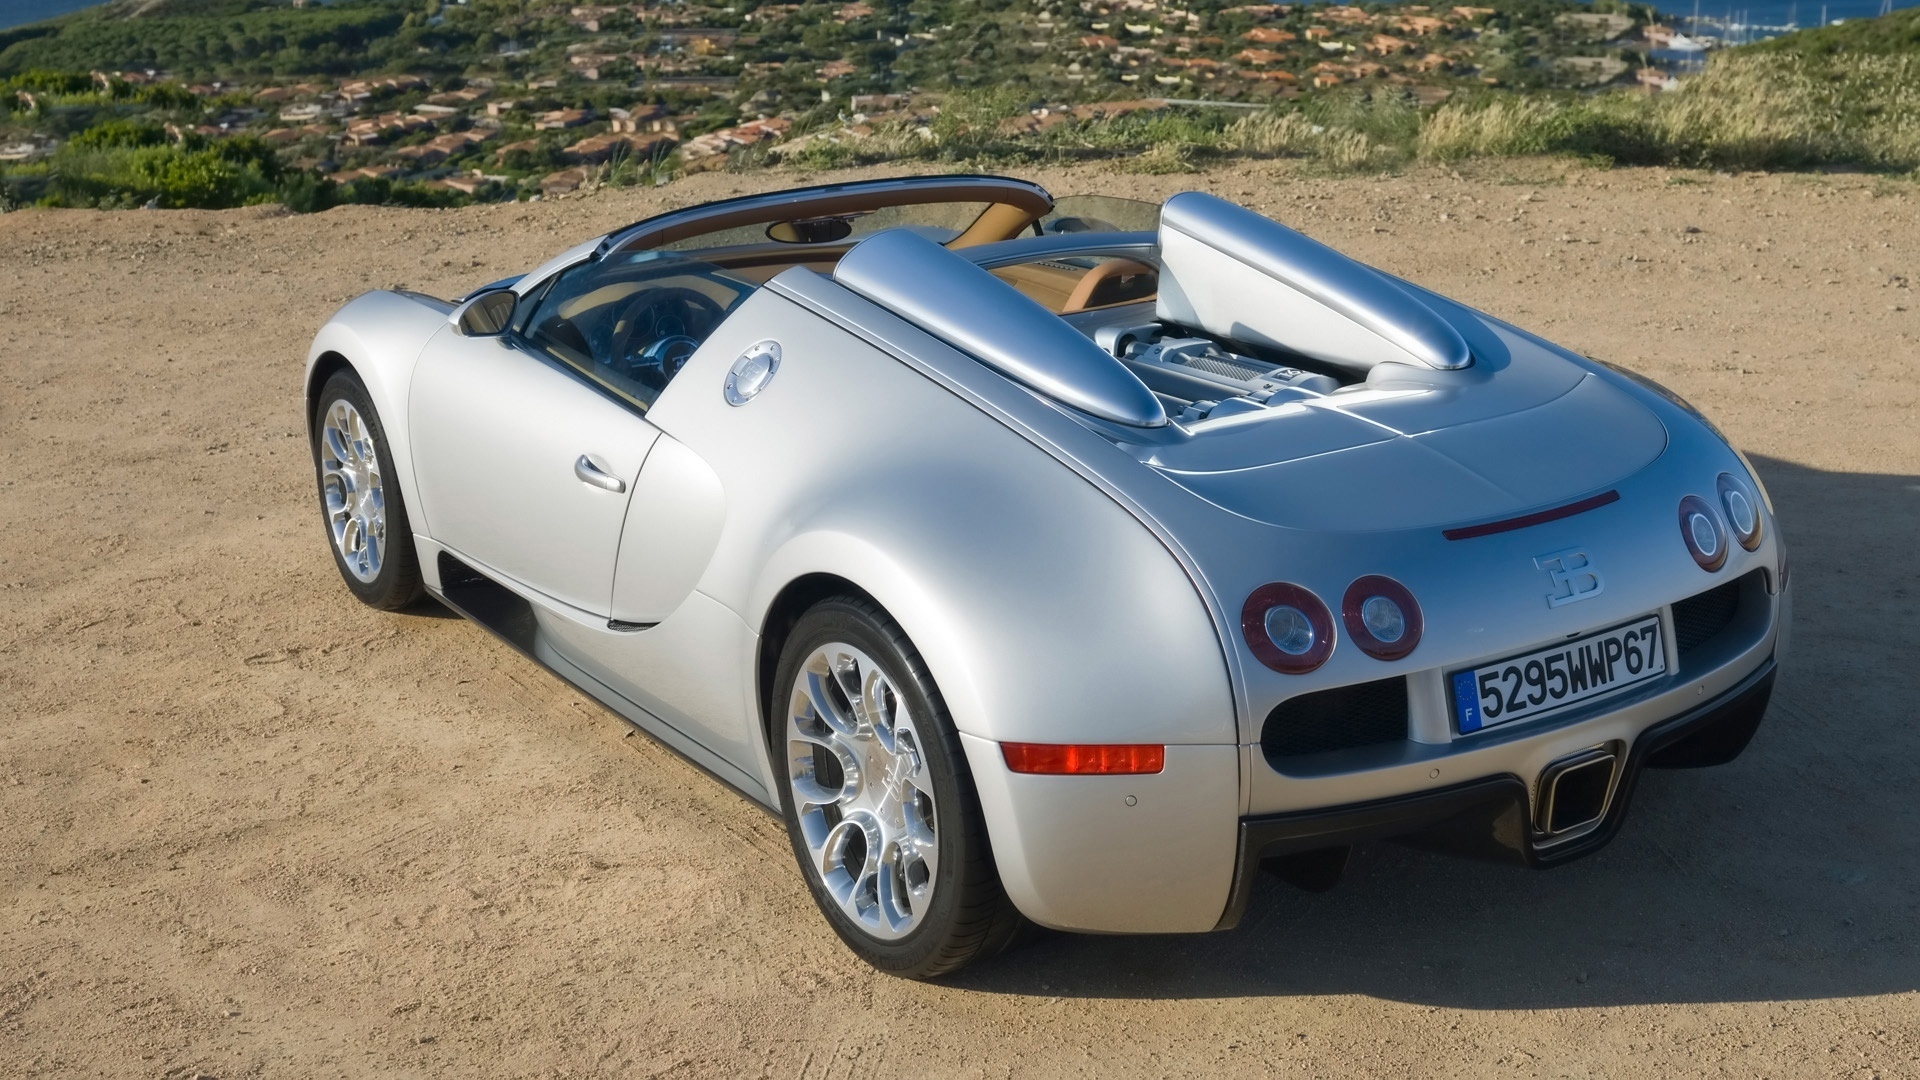 Bugatti Veyron 16.4 Grand Sport in Sardinia 2010 - Rear Angle for 1920 x 1080 HDTV 1080p resolution